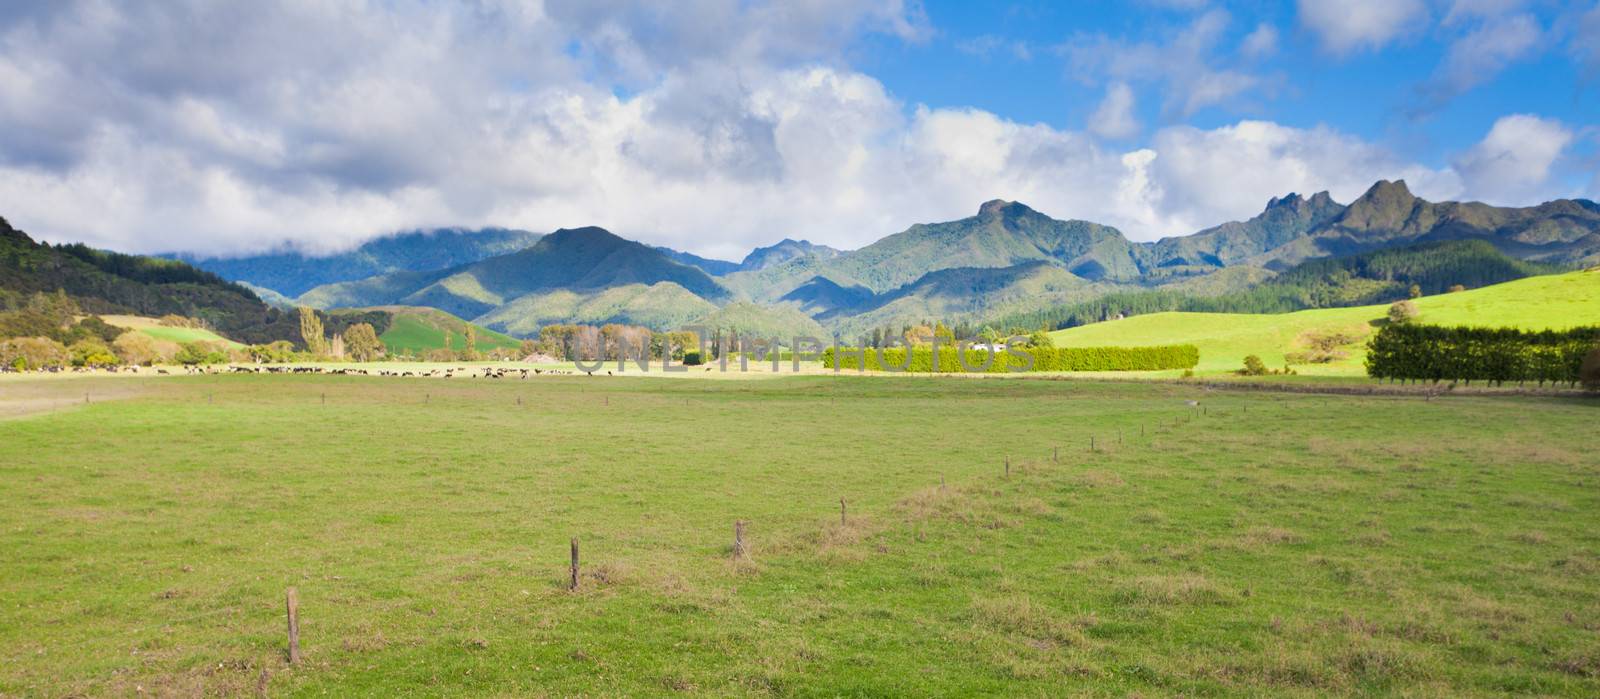 Coromandel Peninsula NZ mountain pasture scenery by PiLens